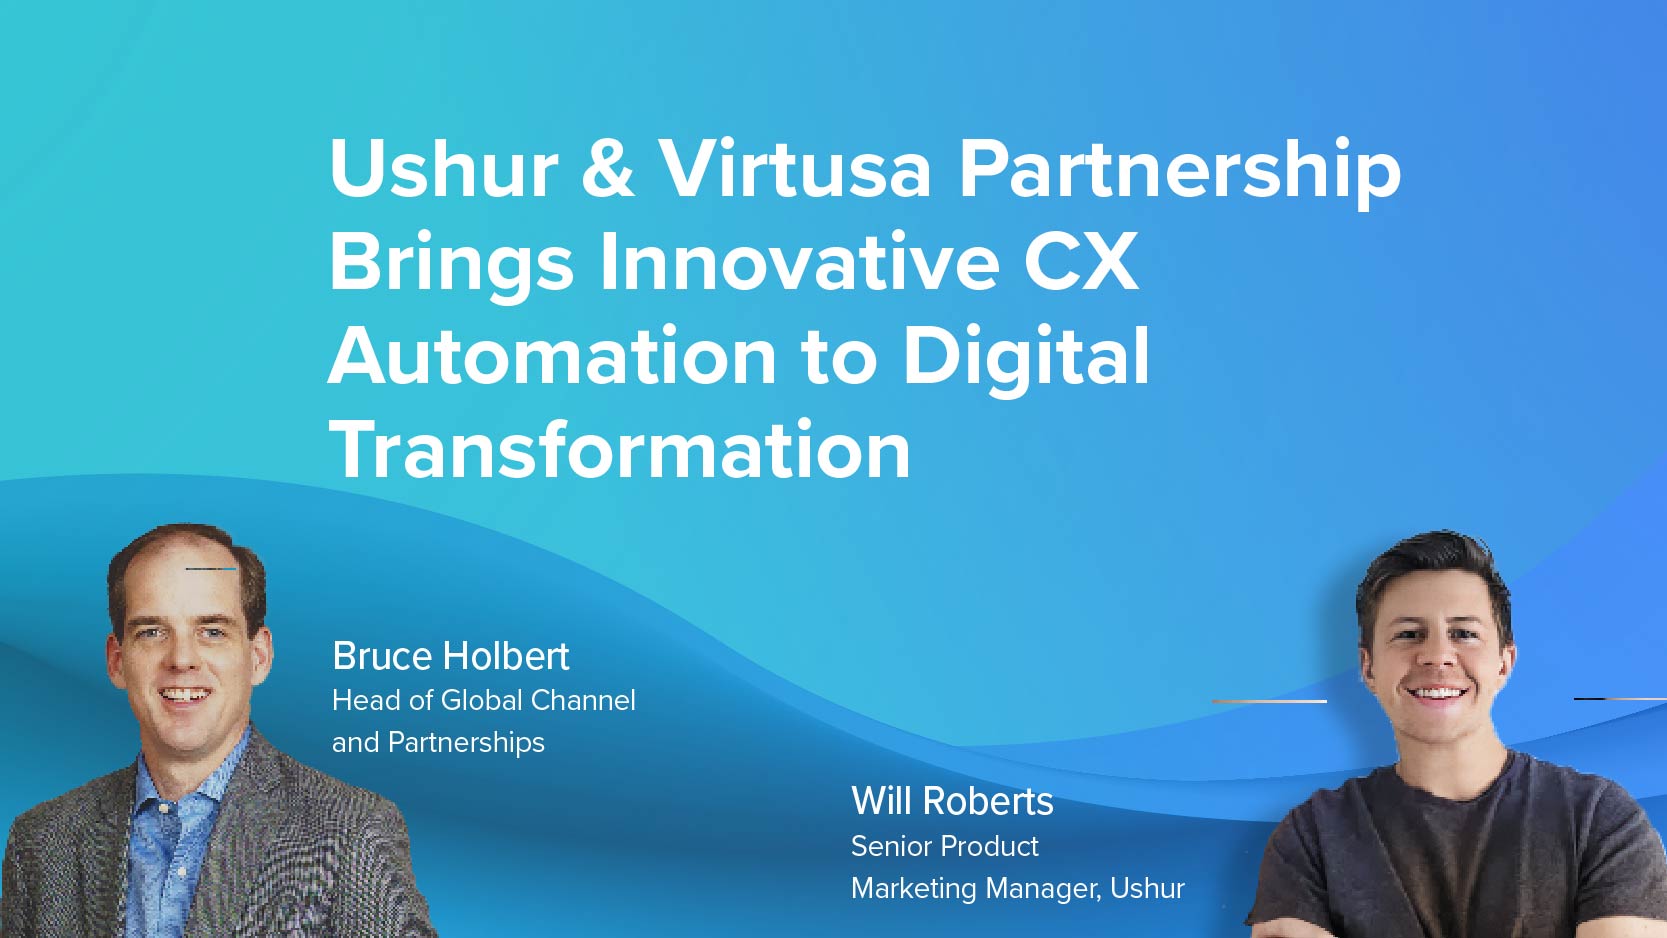 Ushur & Virtusa Partnership Brings Innovative CX Automation to Digital Transformation